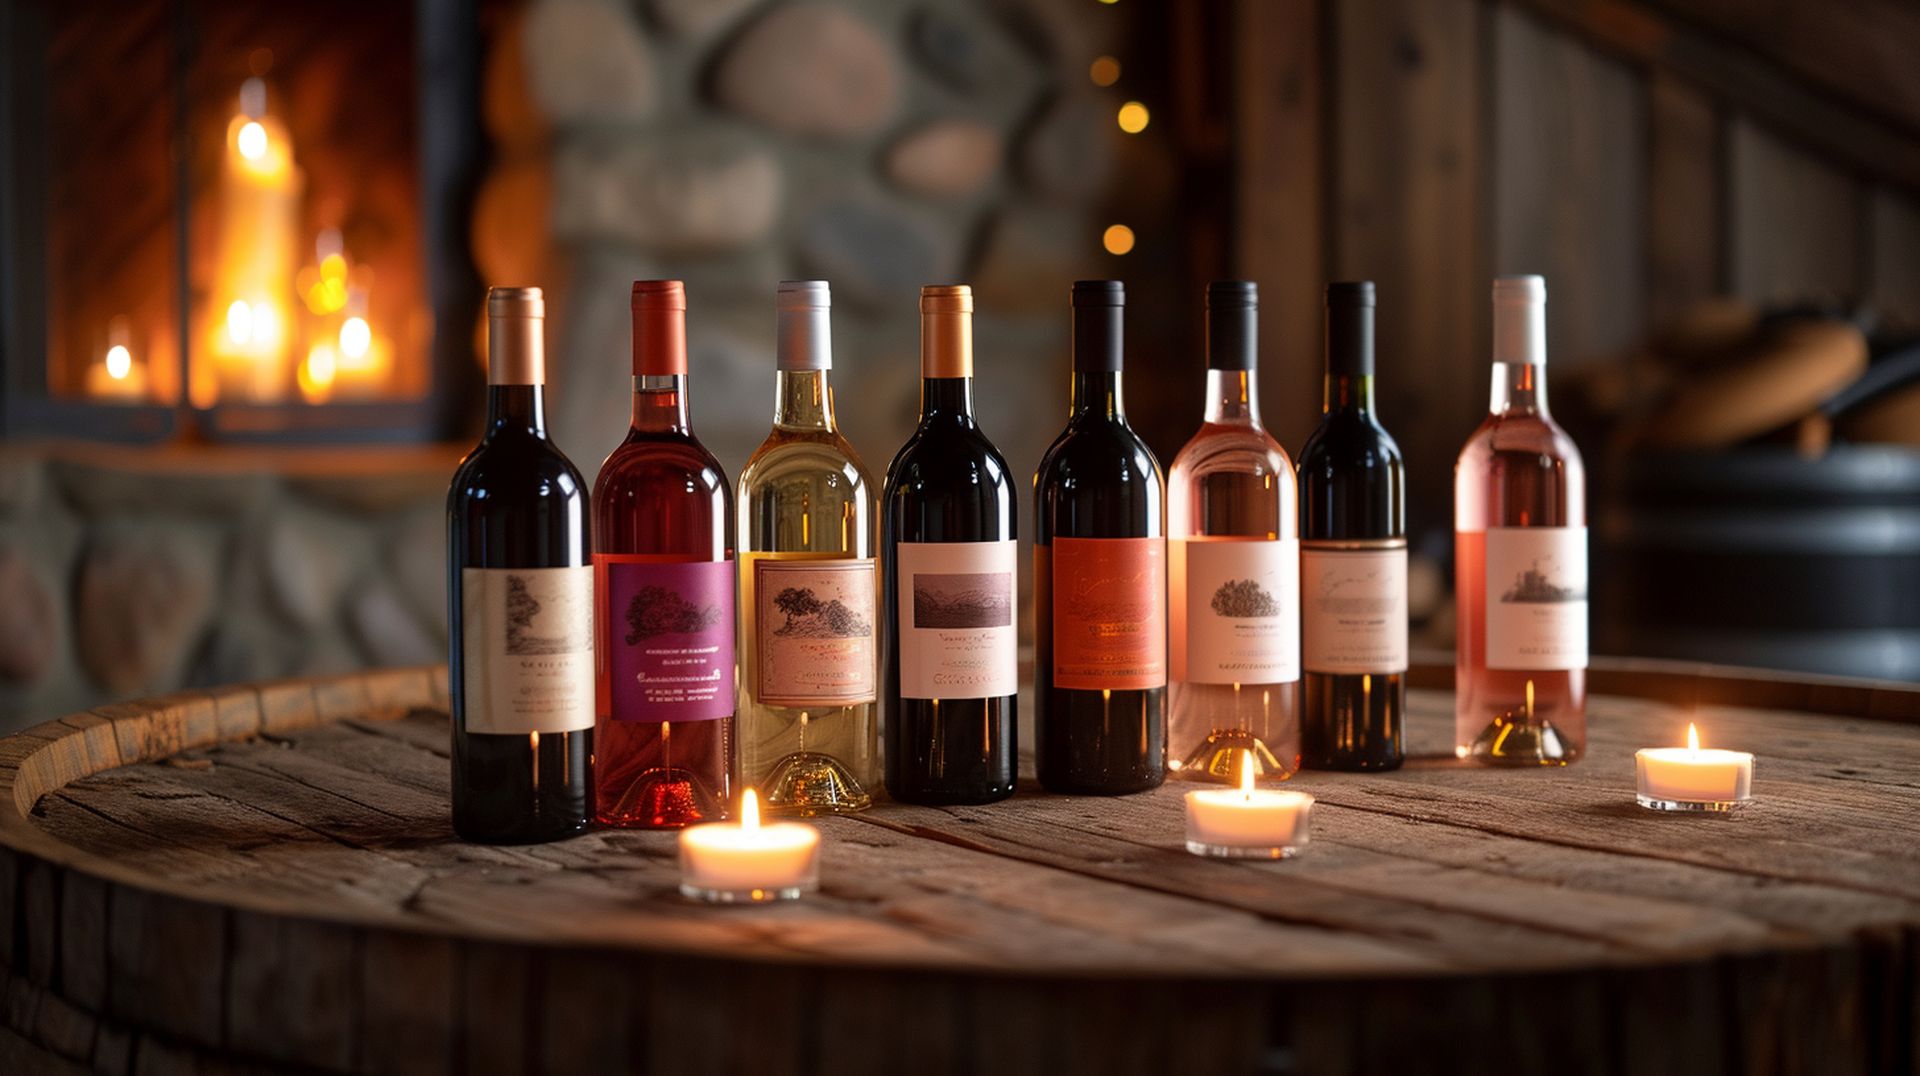 After Valentines Day - encyclopedia wines-yrano_Create_an_image_showcasing_six_elegant_wine_bottles